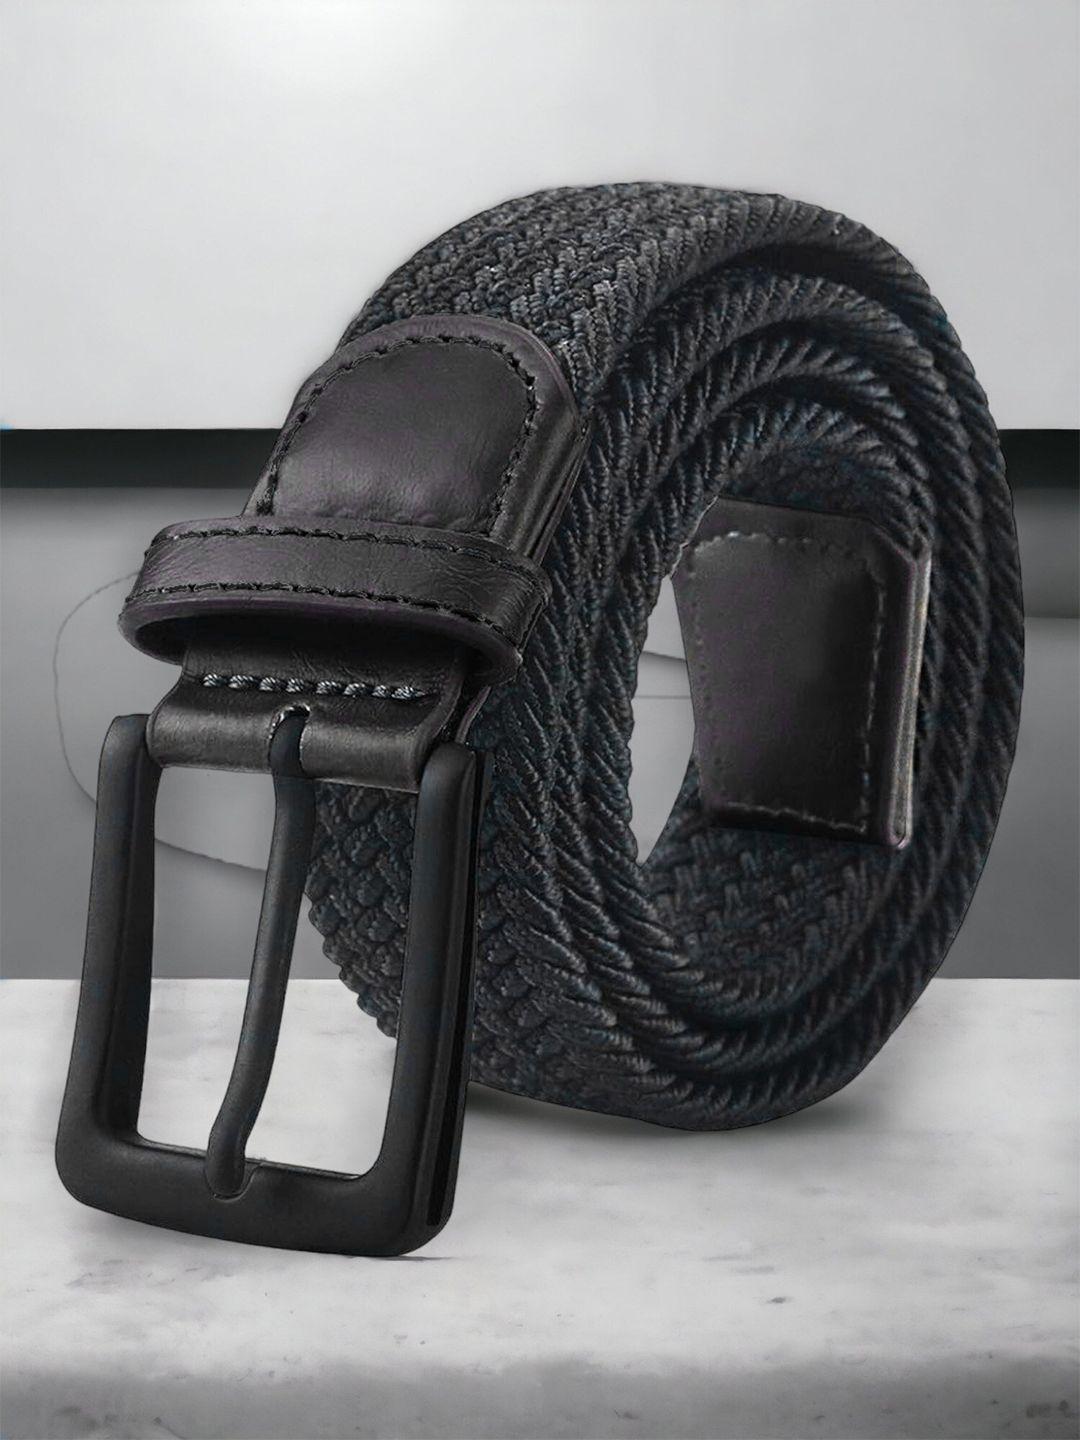 ZORO Unisex Woven Design Stretchable Belt